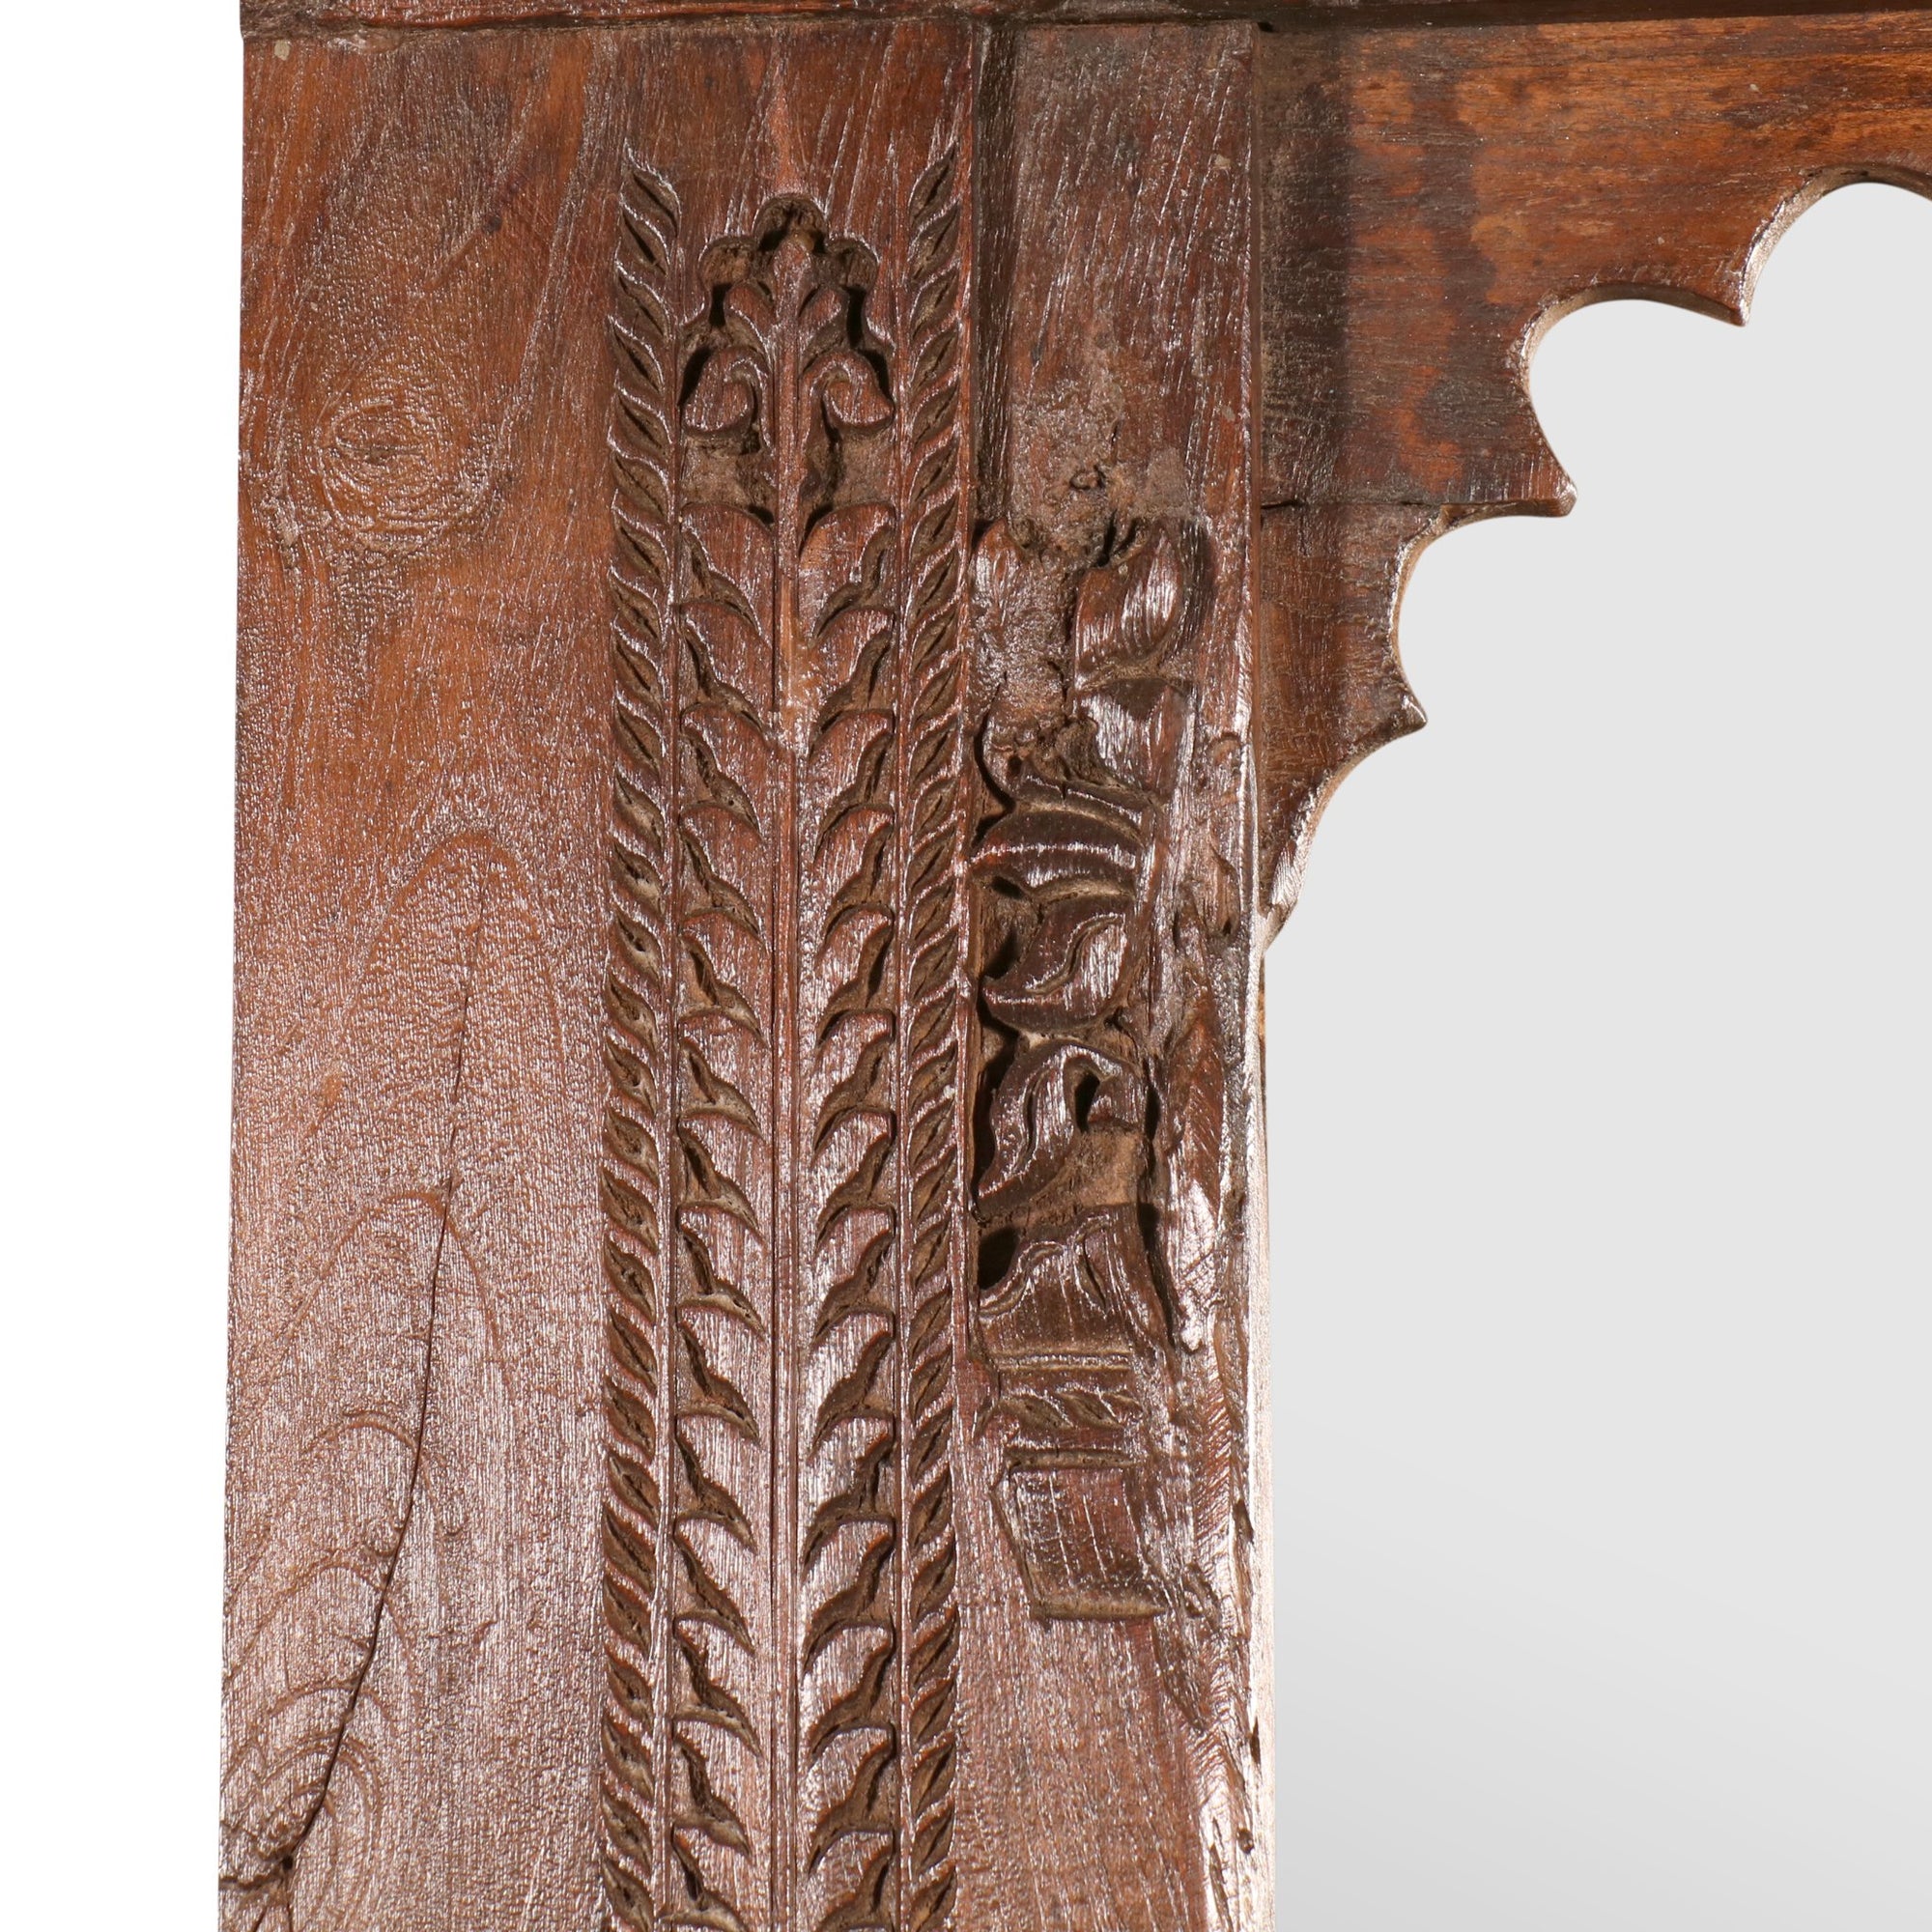 Carved Teak Wall Niche Mirror From Banswara - 19thC - 52 x 6 x 48 (wxdxh cms) - A6137